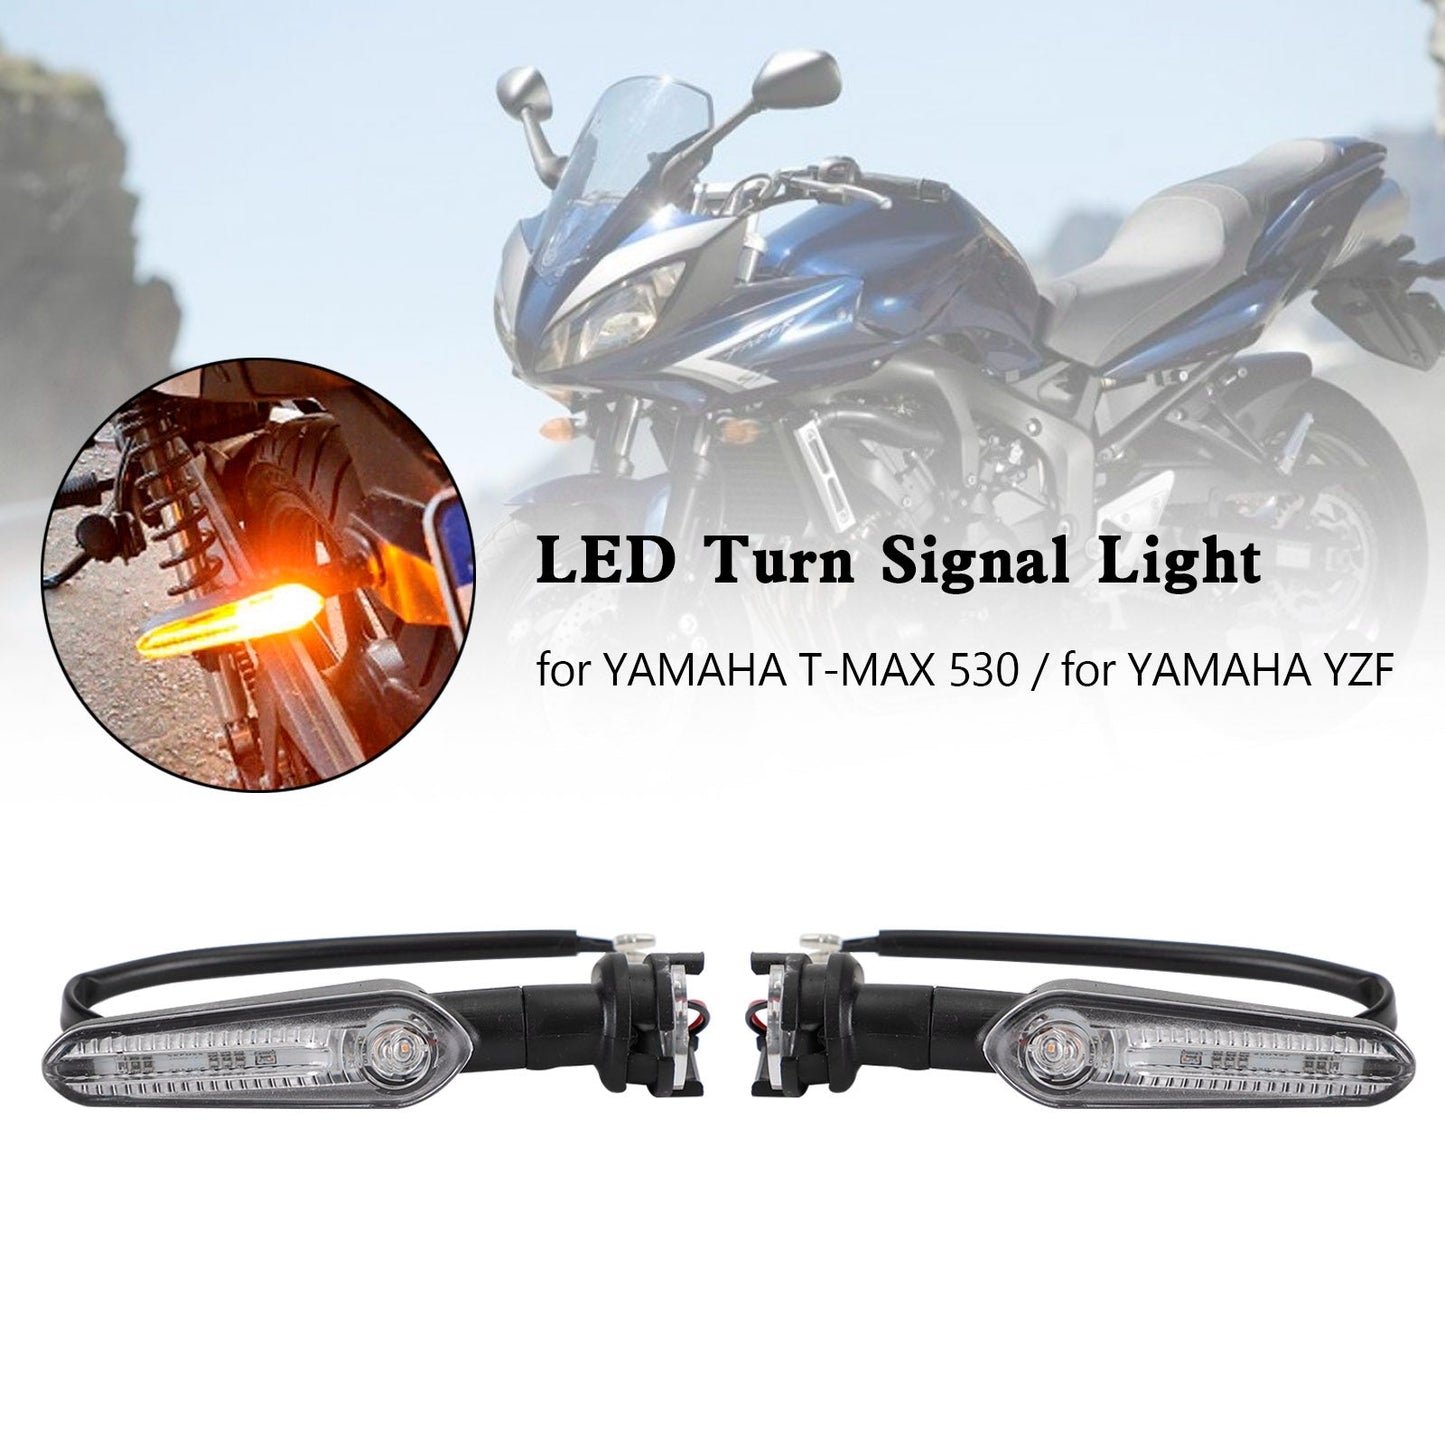 YAMAHA MT-25 MT-03 MT-07 MT-09 T7 LED Refraction Blinker Turn Signal Light